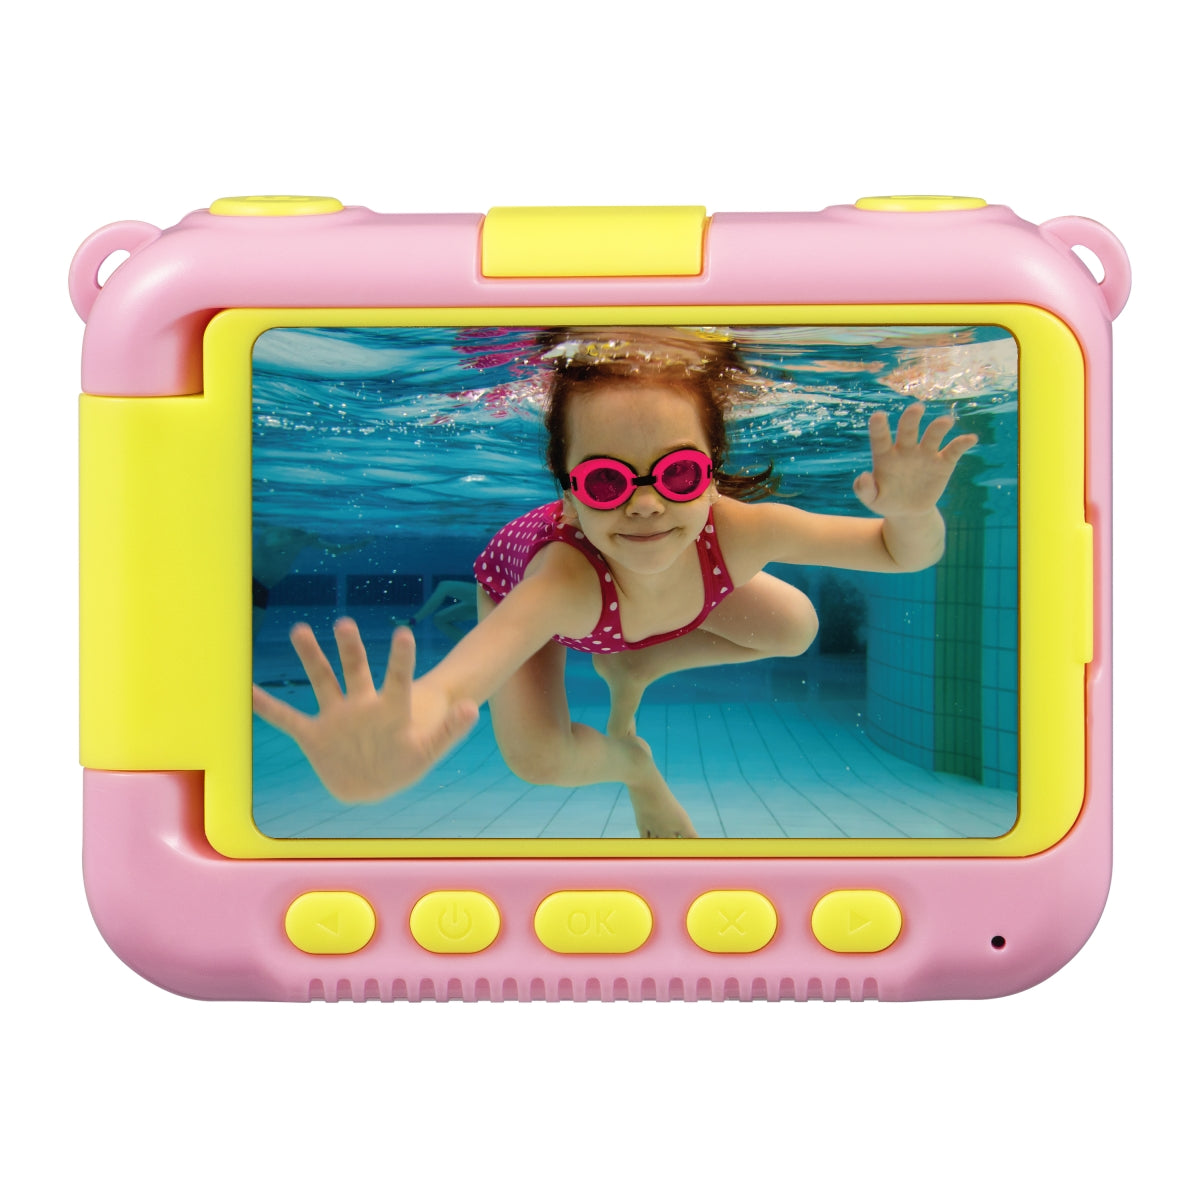 Volkano Kids Funtime 2.0 series Waterproof Camera with 180° Rotatable Screen - Pink